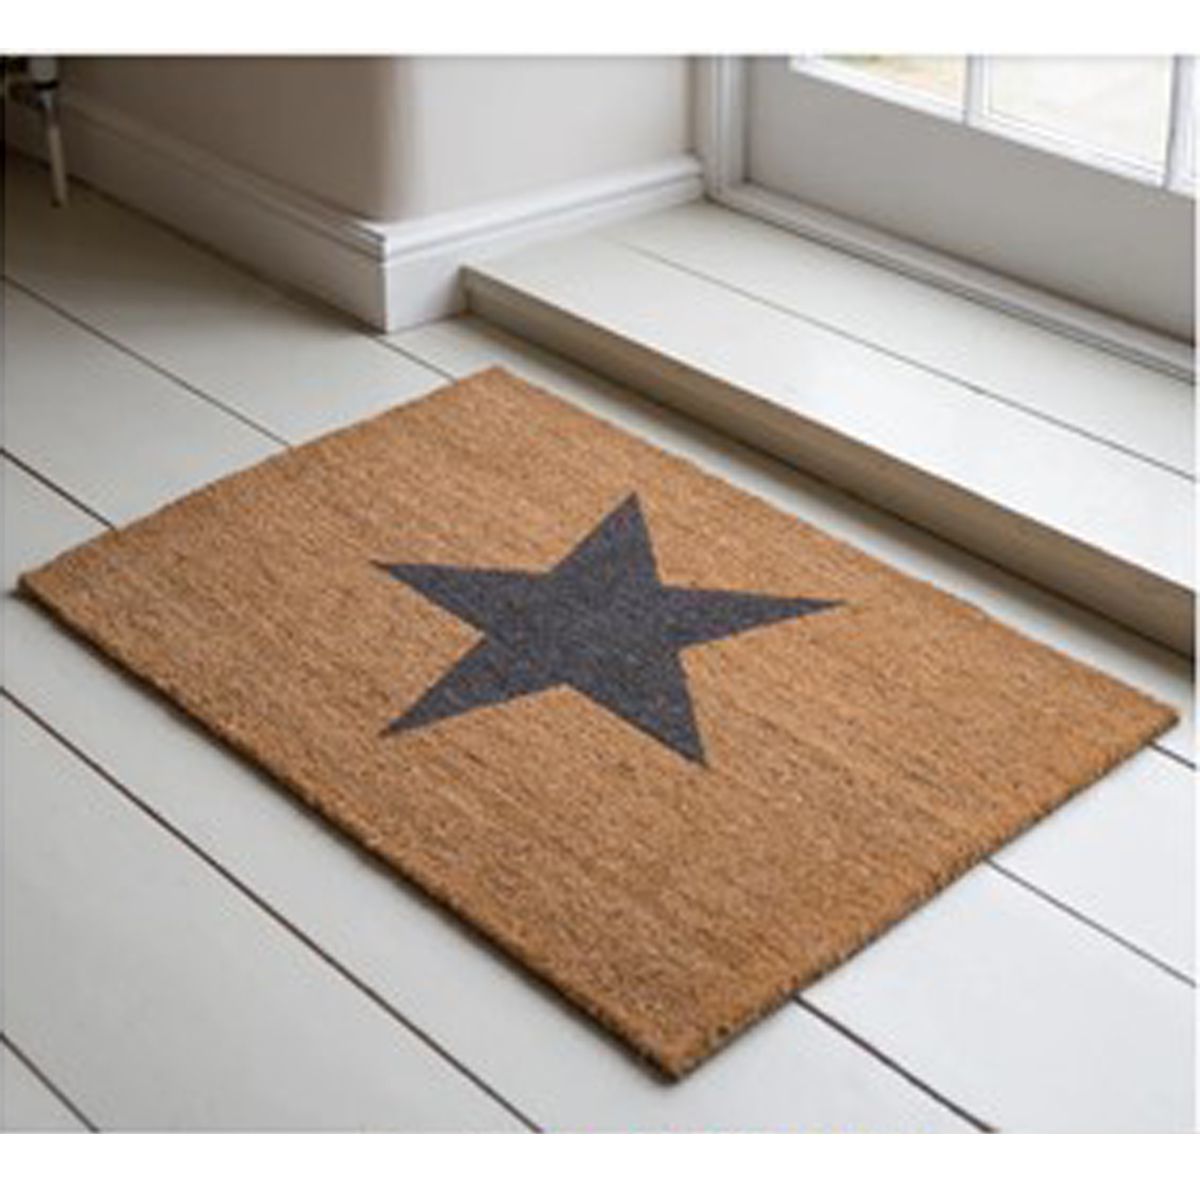 Large Charcoal Grey Star Natural Fibre Brown Coir Hall Porch Door Mat Doormat 